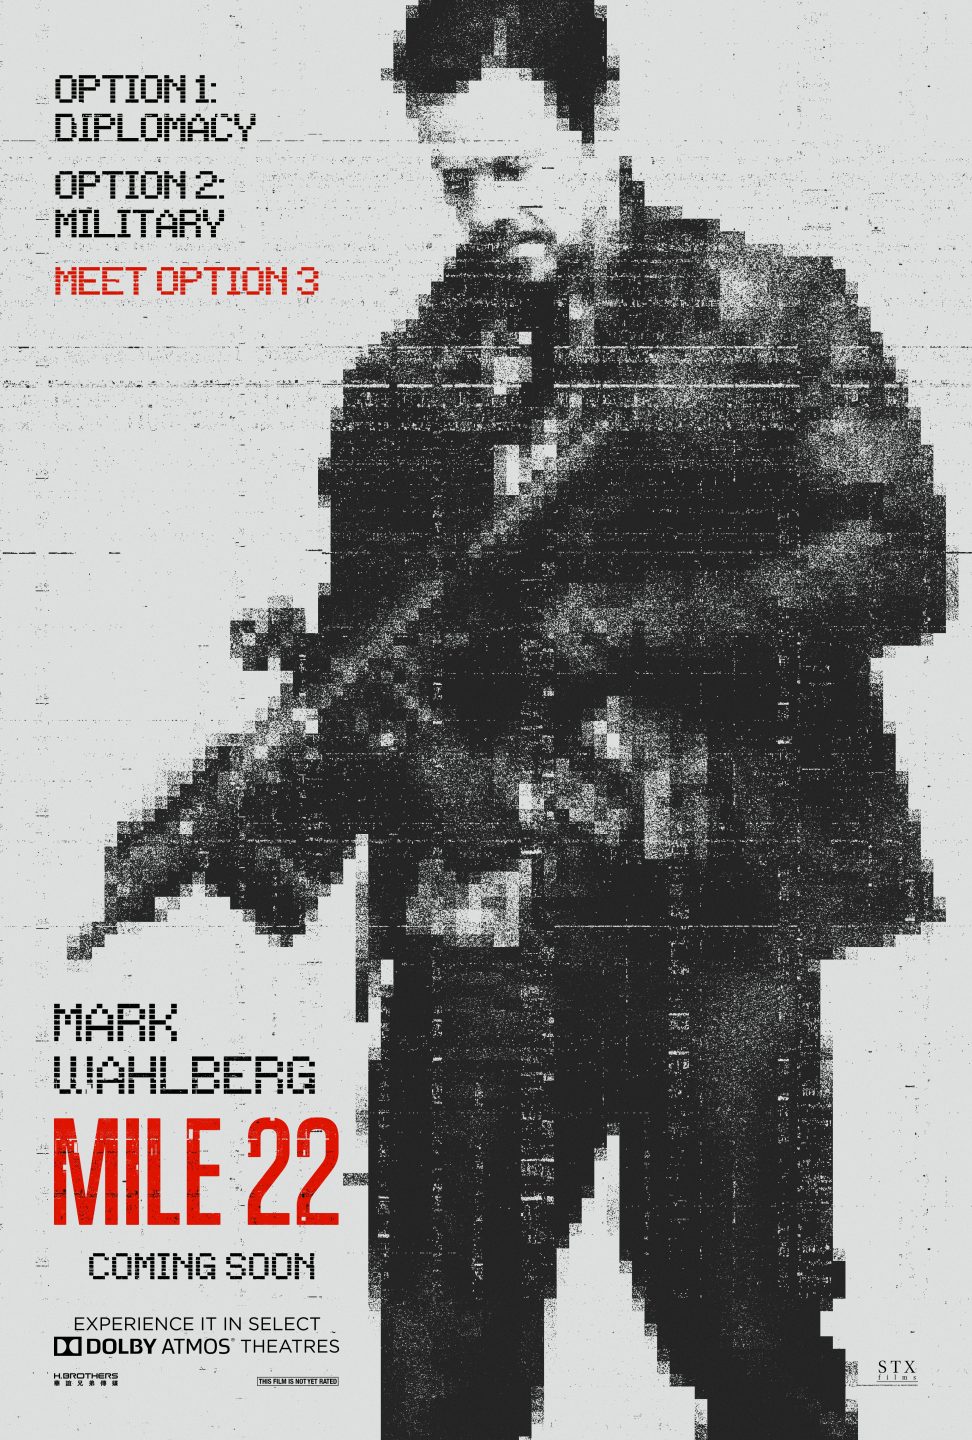 Mile 22 poster (STX Films/STX Entertainment)